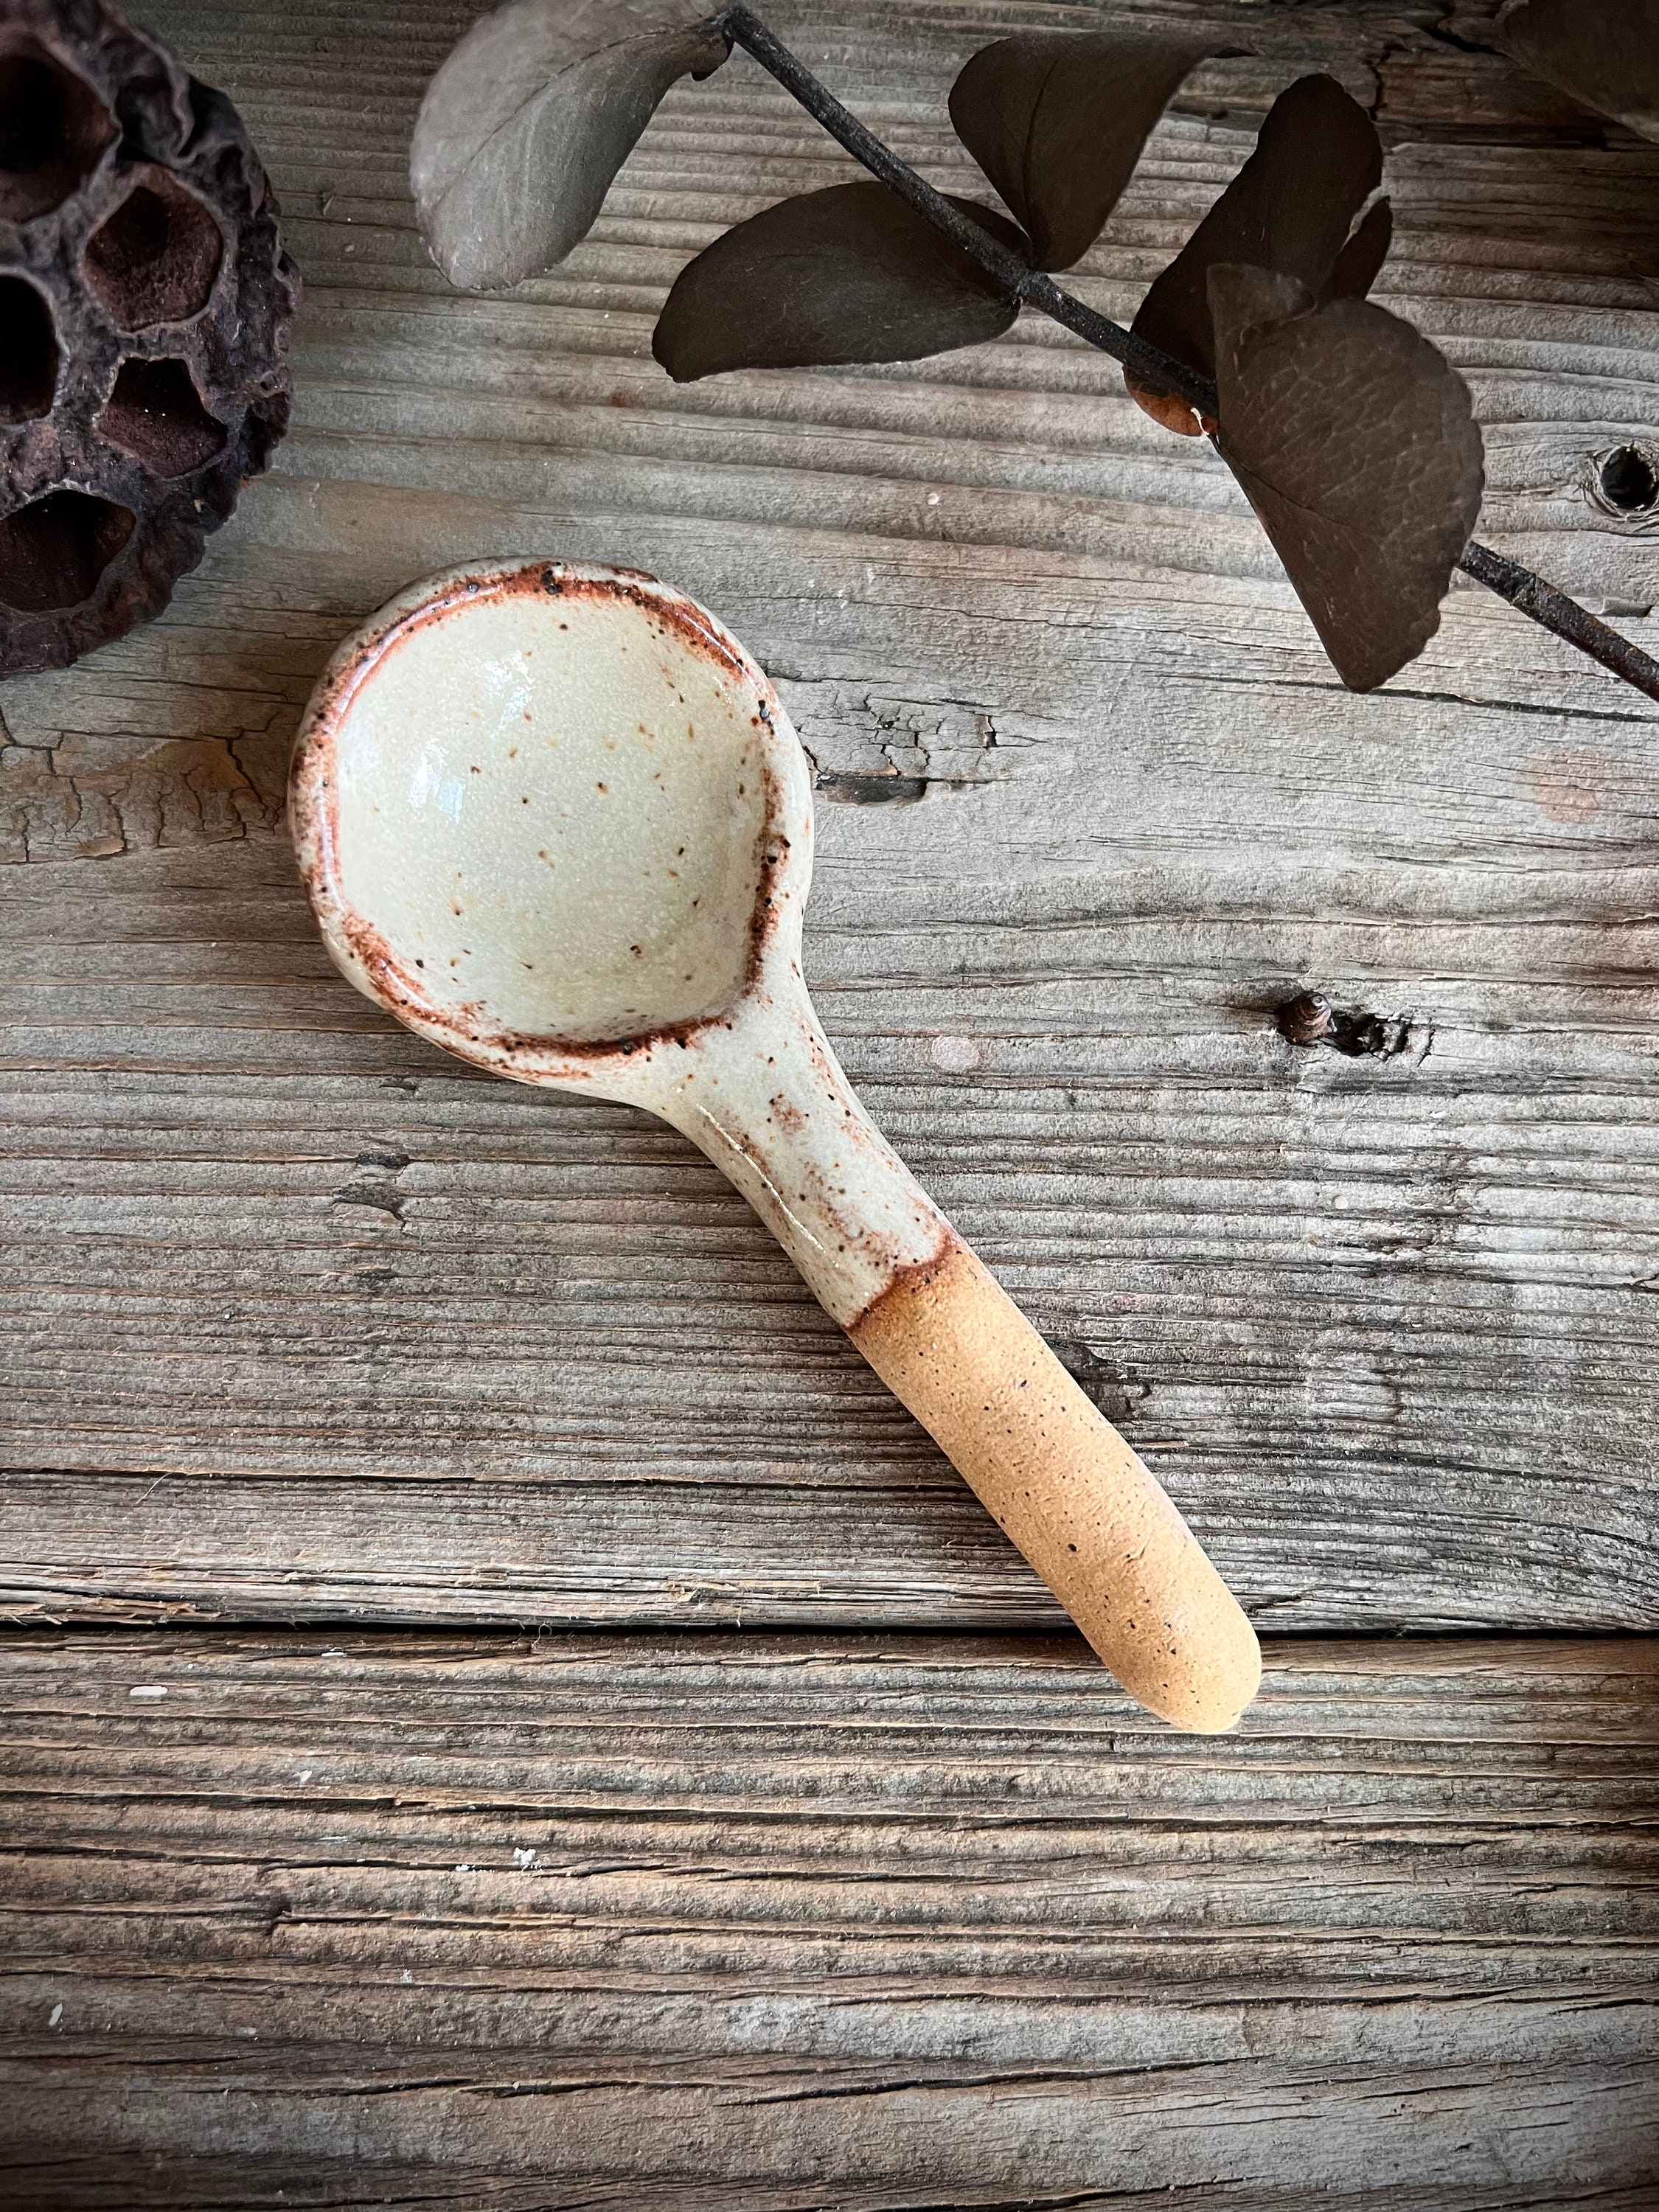 Cucharas soperas, spoons. #ceramica #ceramics #pottery #handmadeceramics  #slabbuilt #slabbuiltceramics